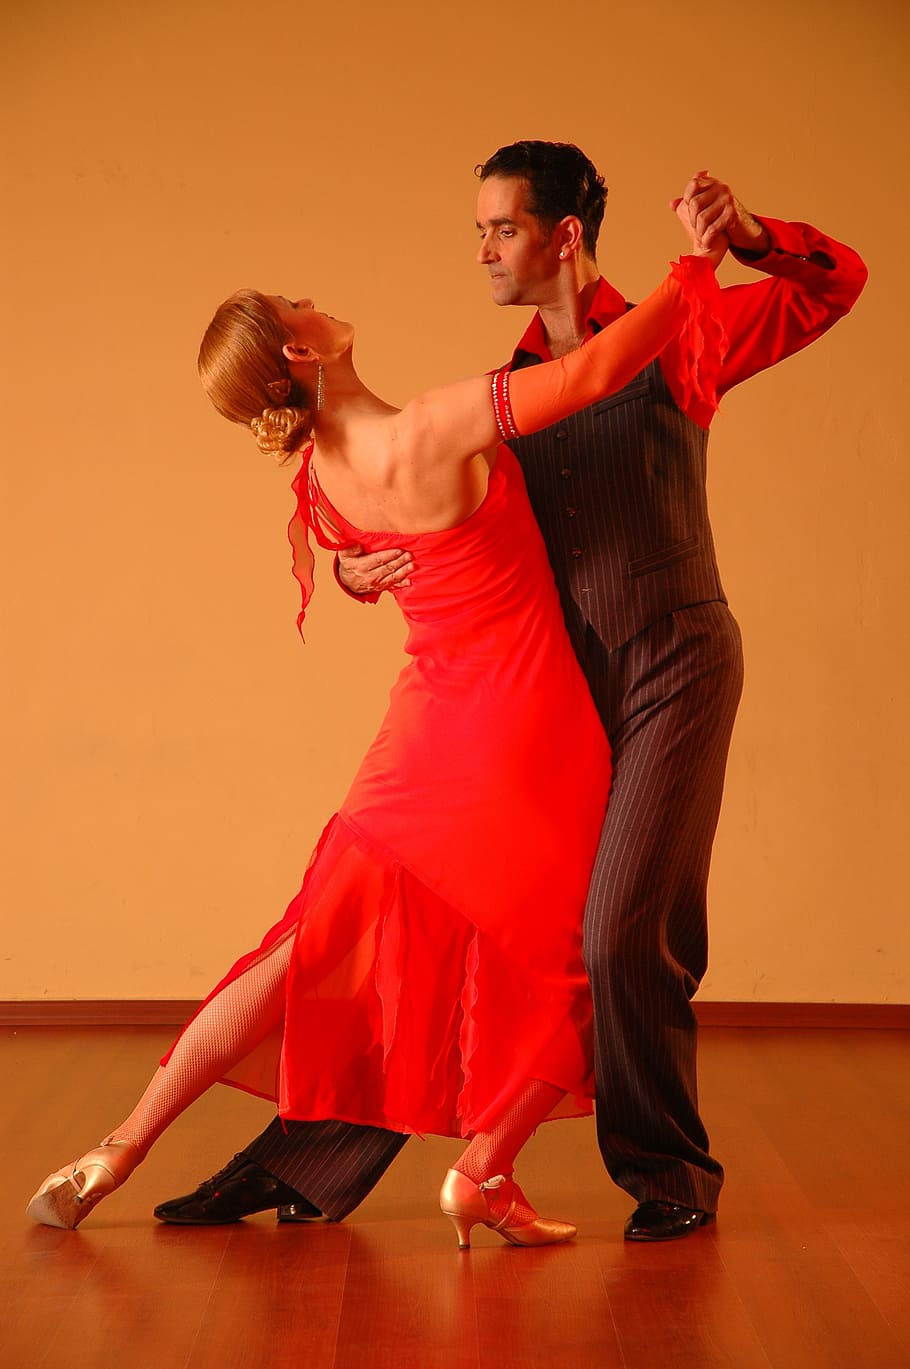 man, woman dancing, dancing, dance, ballroom, elegance, style, tangoing, tango, dancer